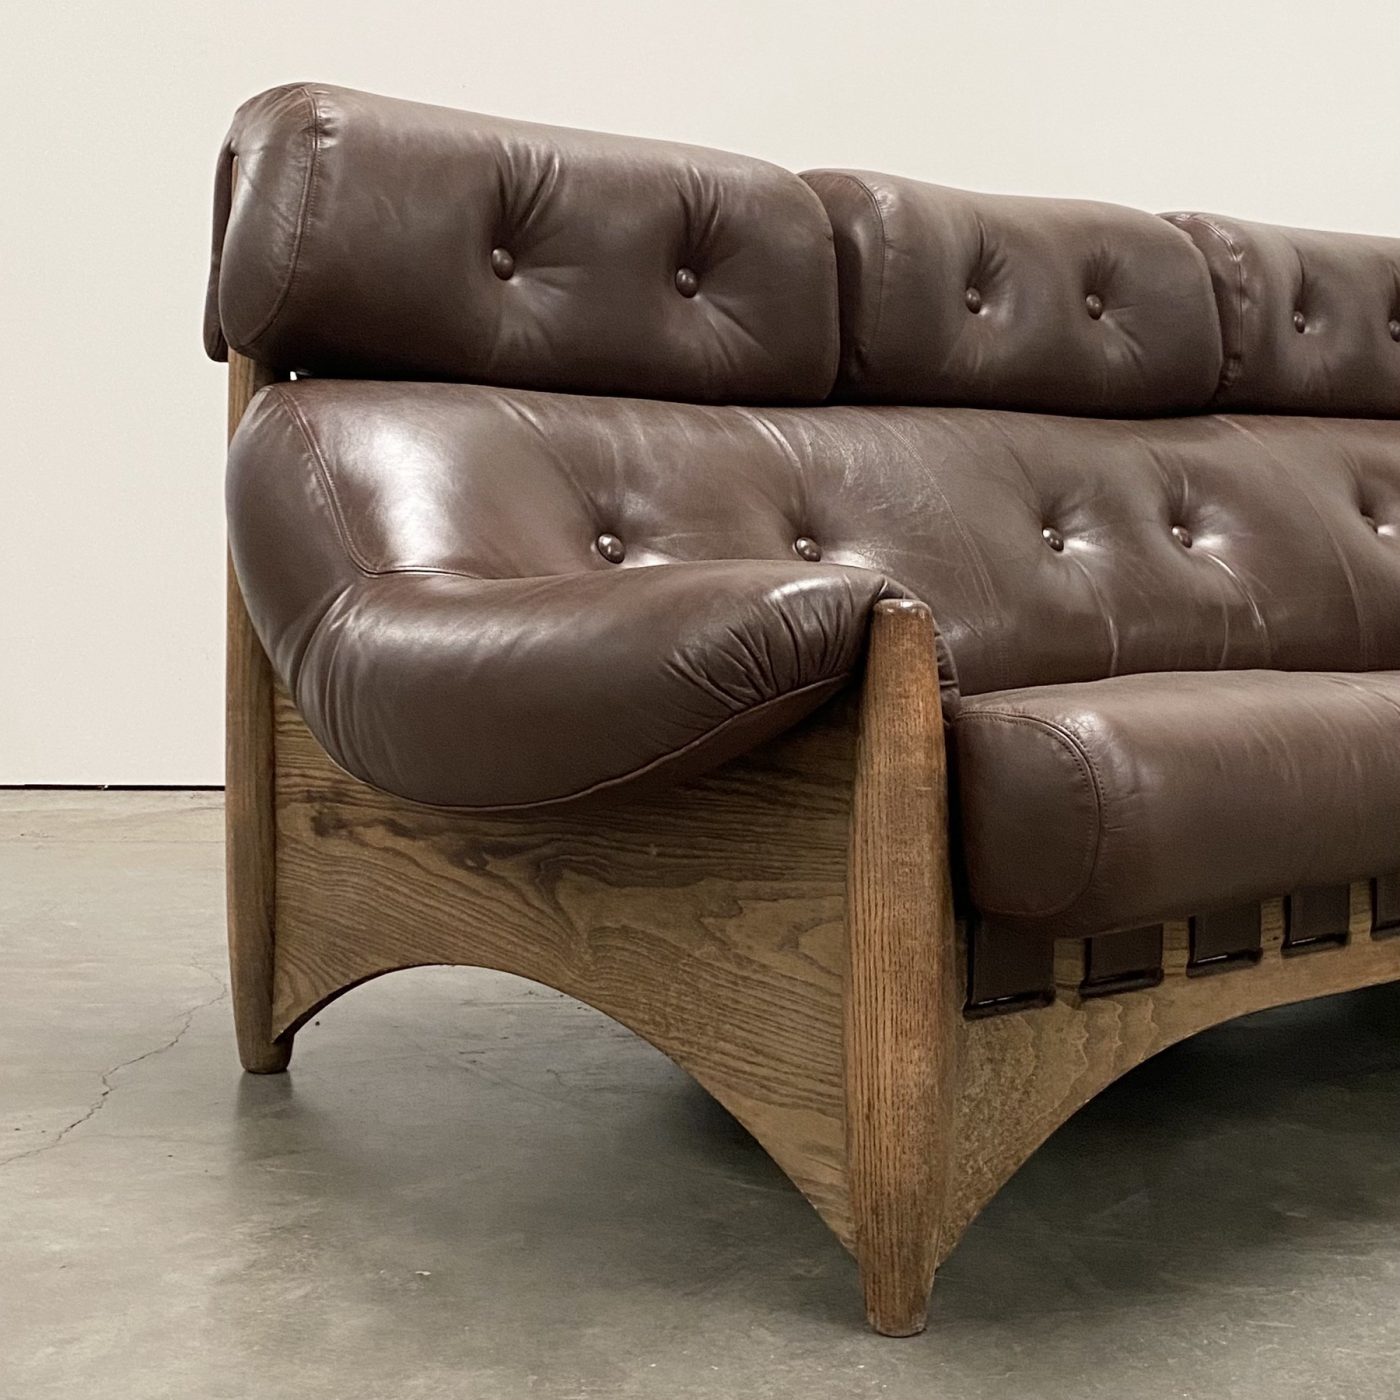 objet-vagabond-leather-sofa0004